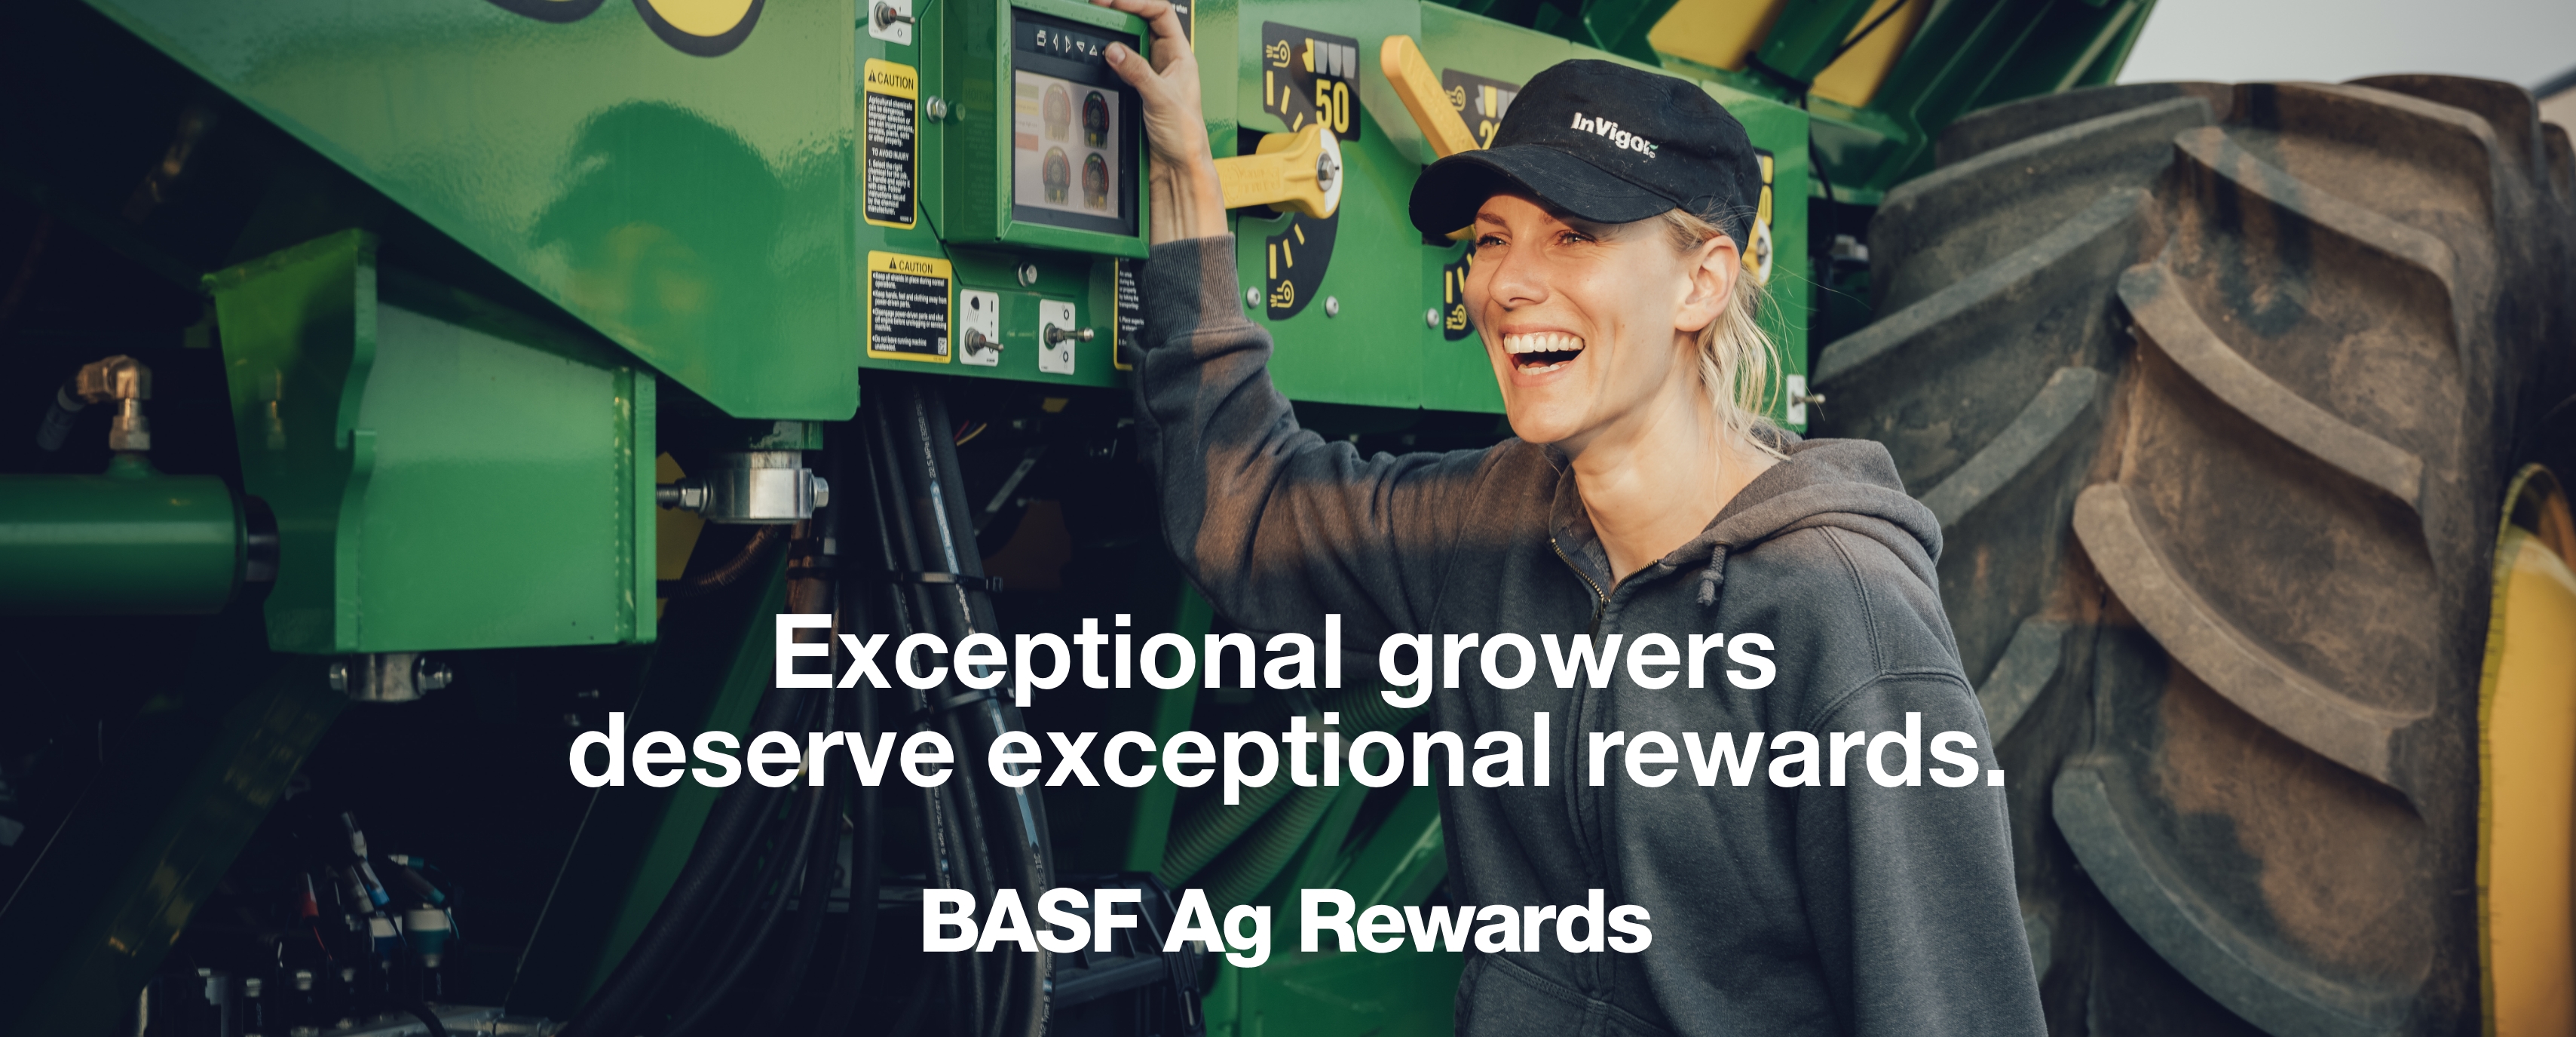 BASF Ag Rewards - Exceptional growers deserve exceptional rewards